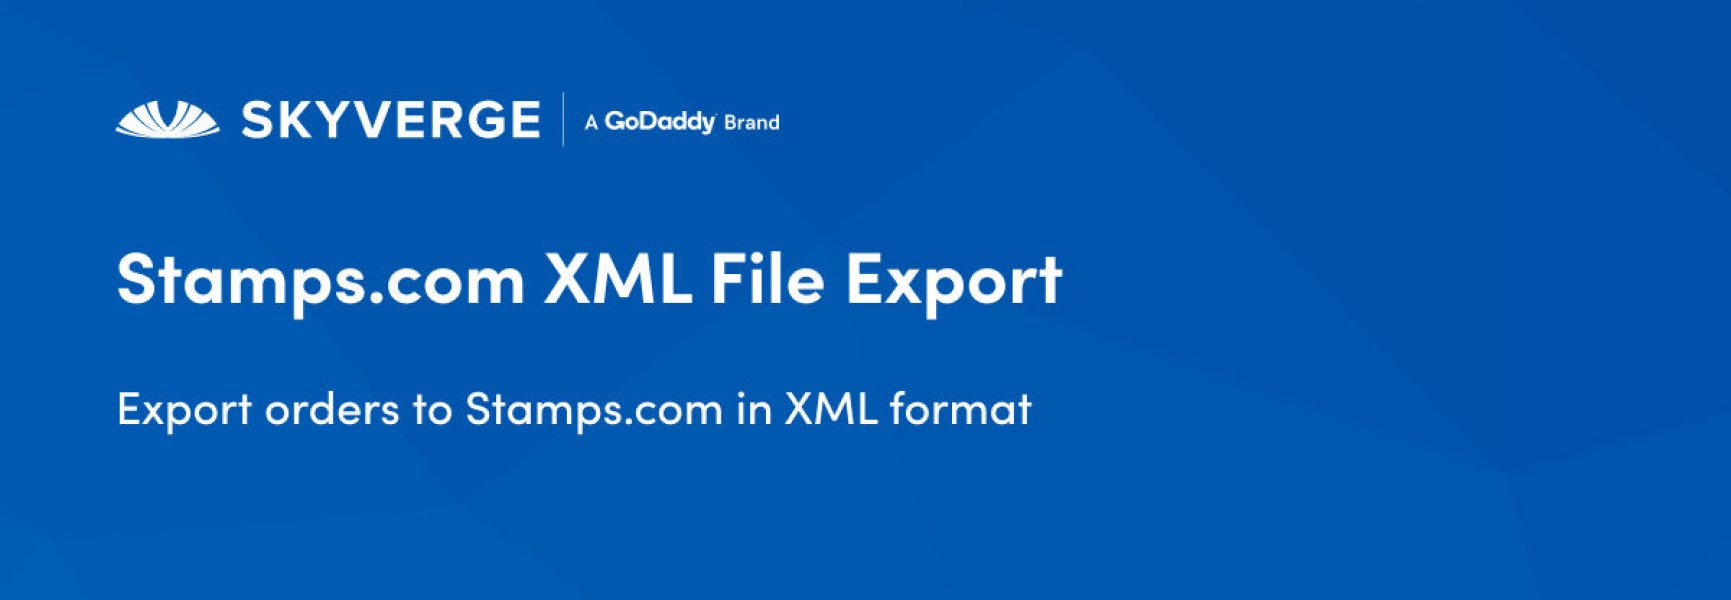 WooCommerce Stampscom XML File Export